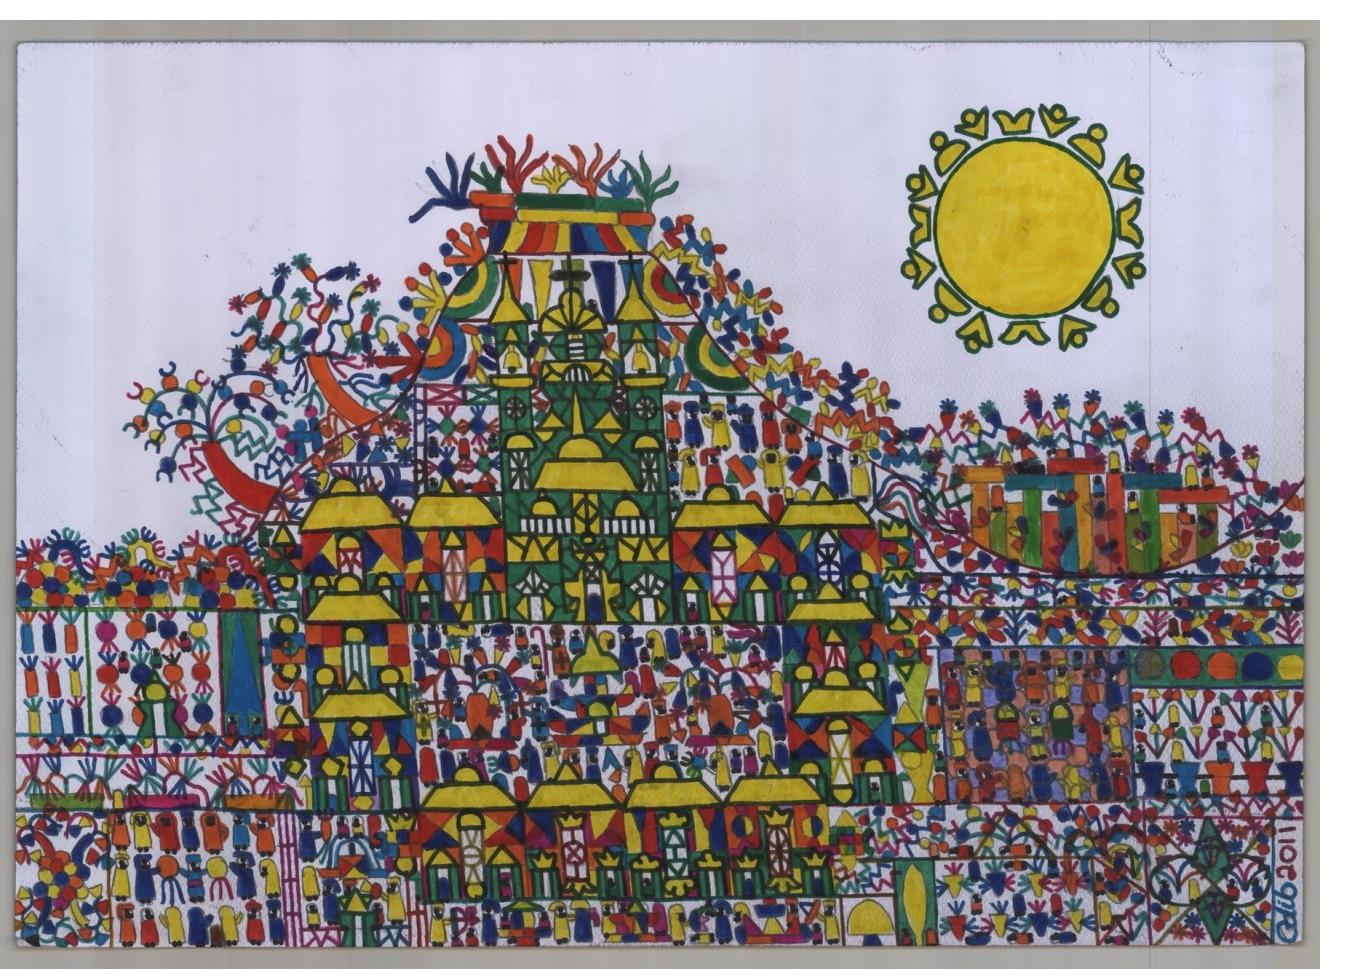 Adib Fattal - 462 "A Church Square" - 30cm x 50 cm - ink on paper - 2011